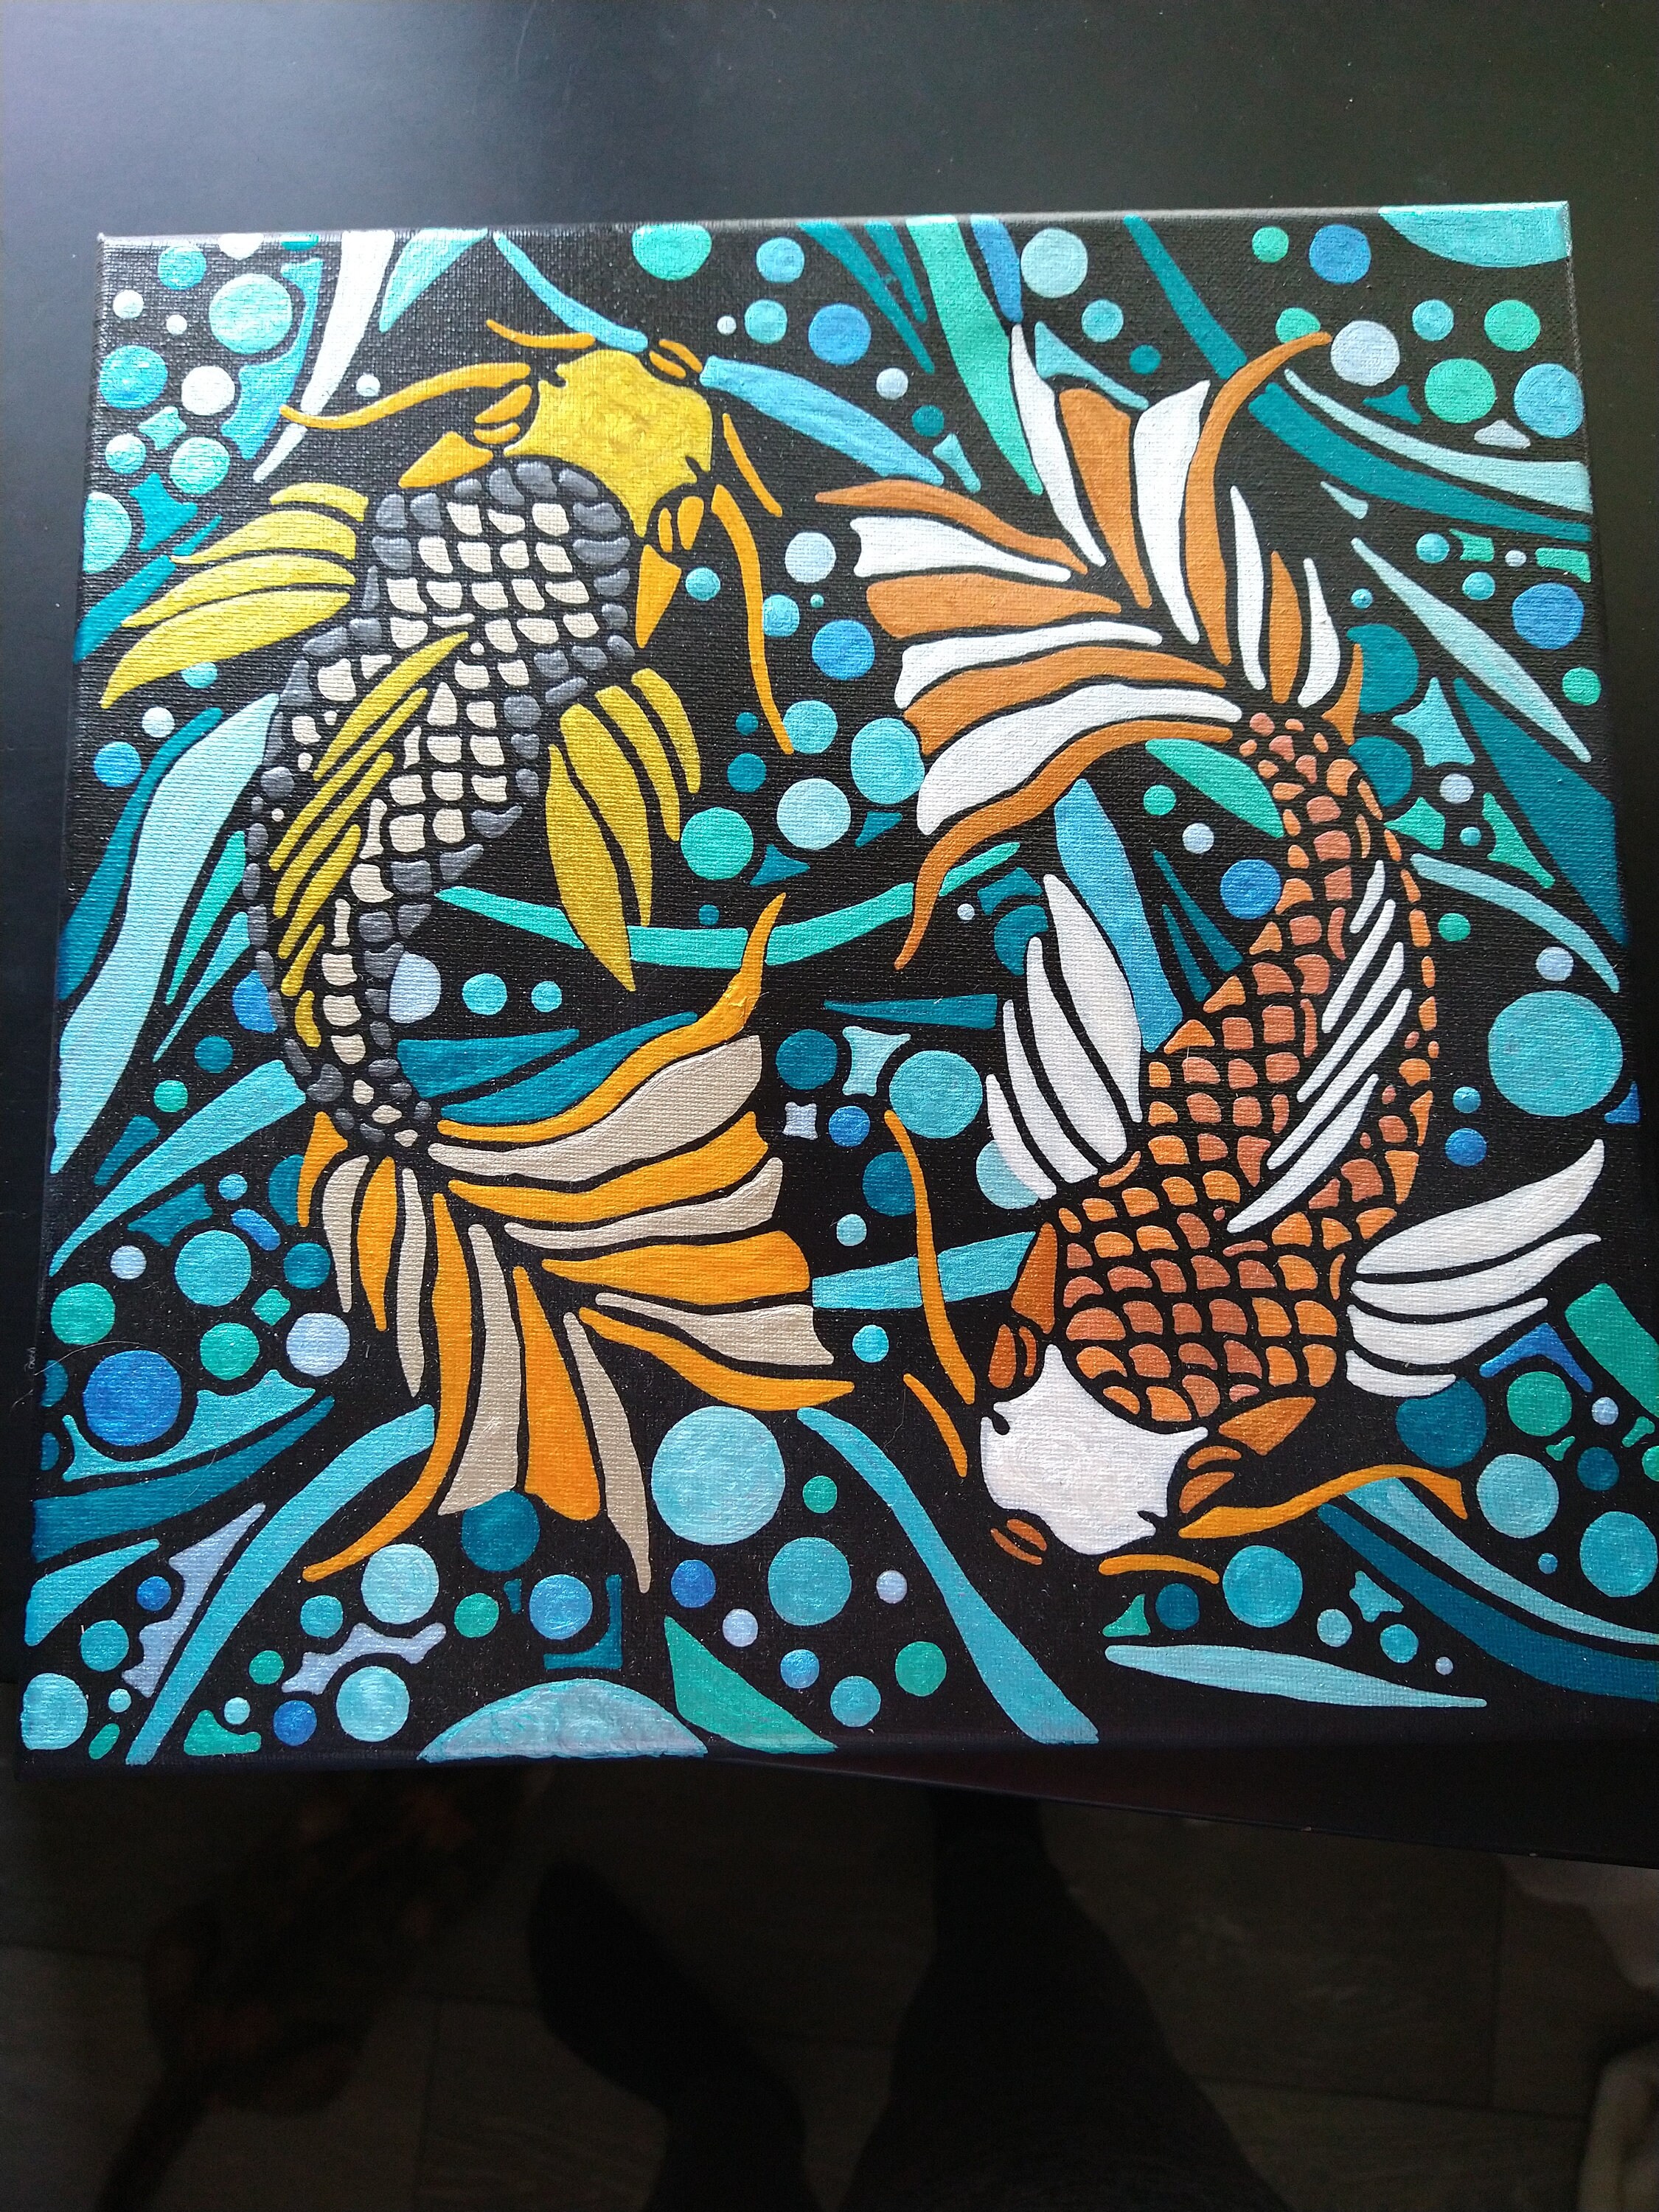 Dot Painting on Canvas Black Fish Art Aboriginal Art Style Hand